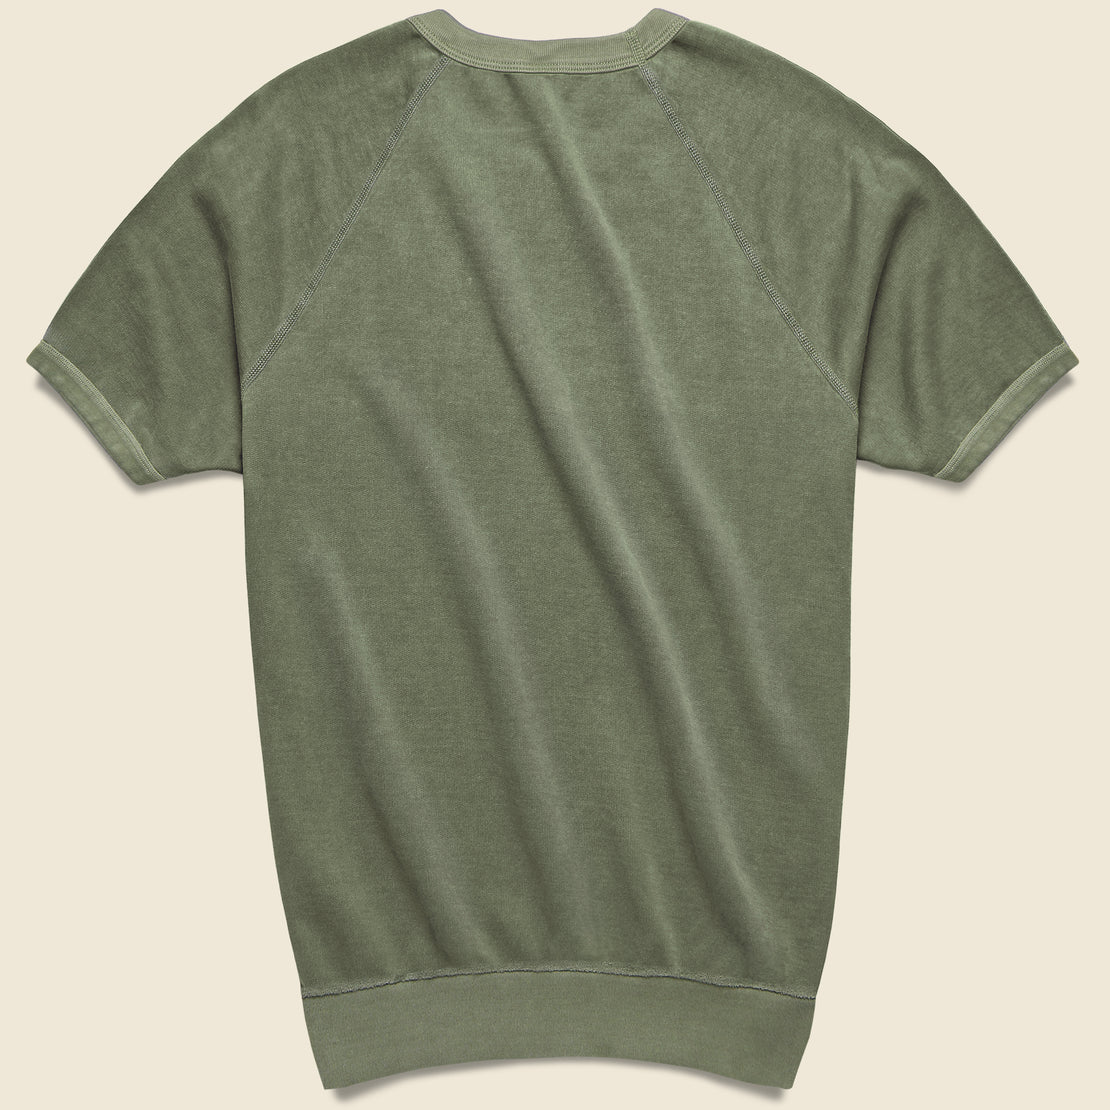 Beach Terry Sweatshirt - Olive - Save Khaki - STAG Provisions - Tops - Fleece / Sweatshirt